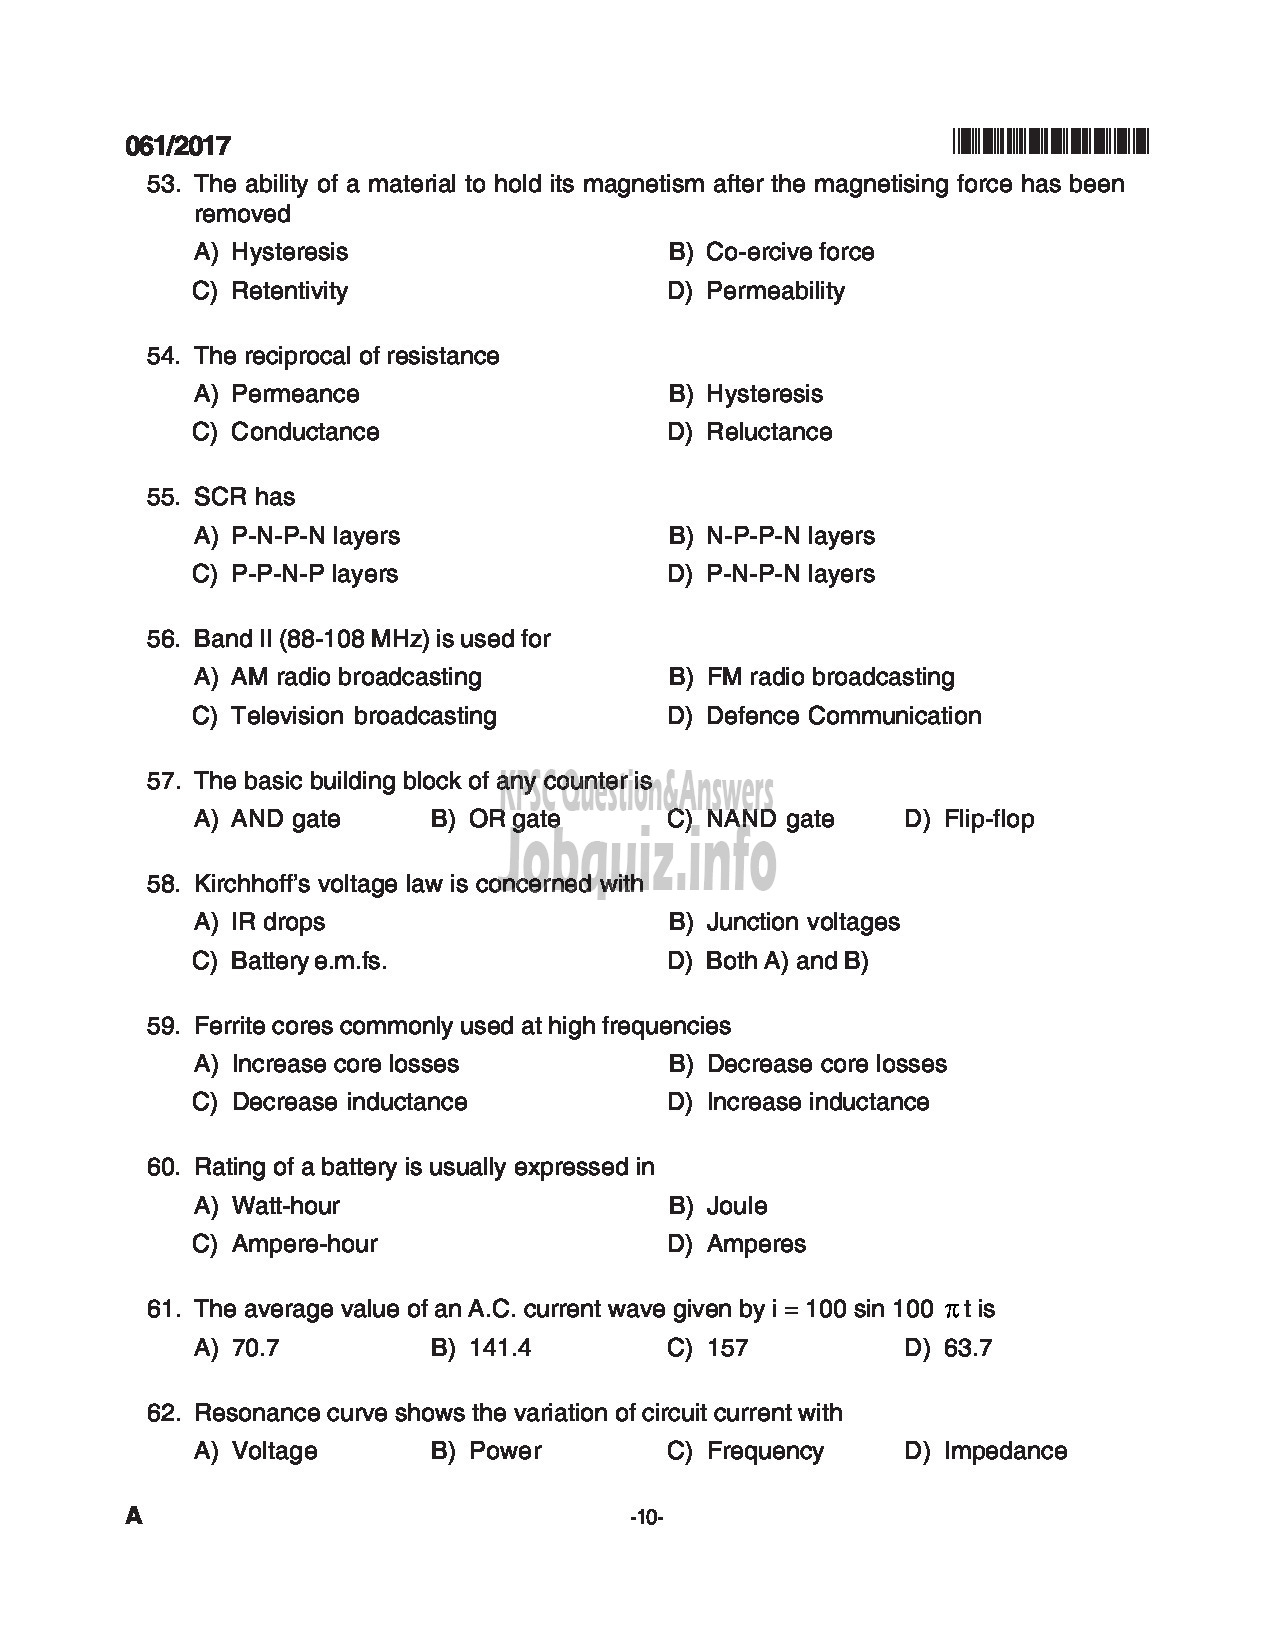 Kerala PSC Question Paper - TRADESMAN ELECTRONICS TECHNICAL EDUCATION QUESTION PAPER-10